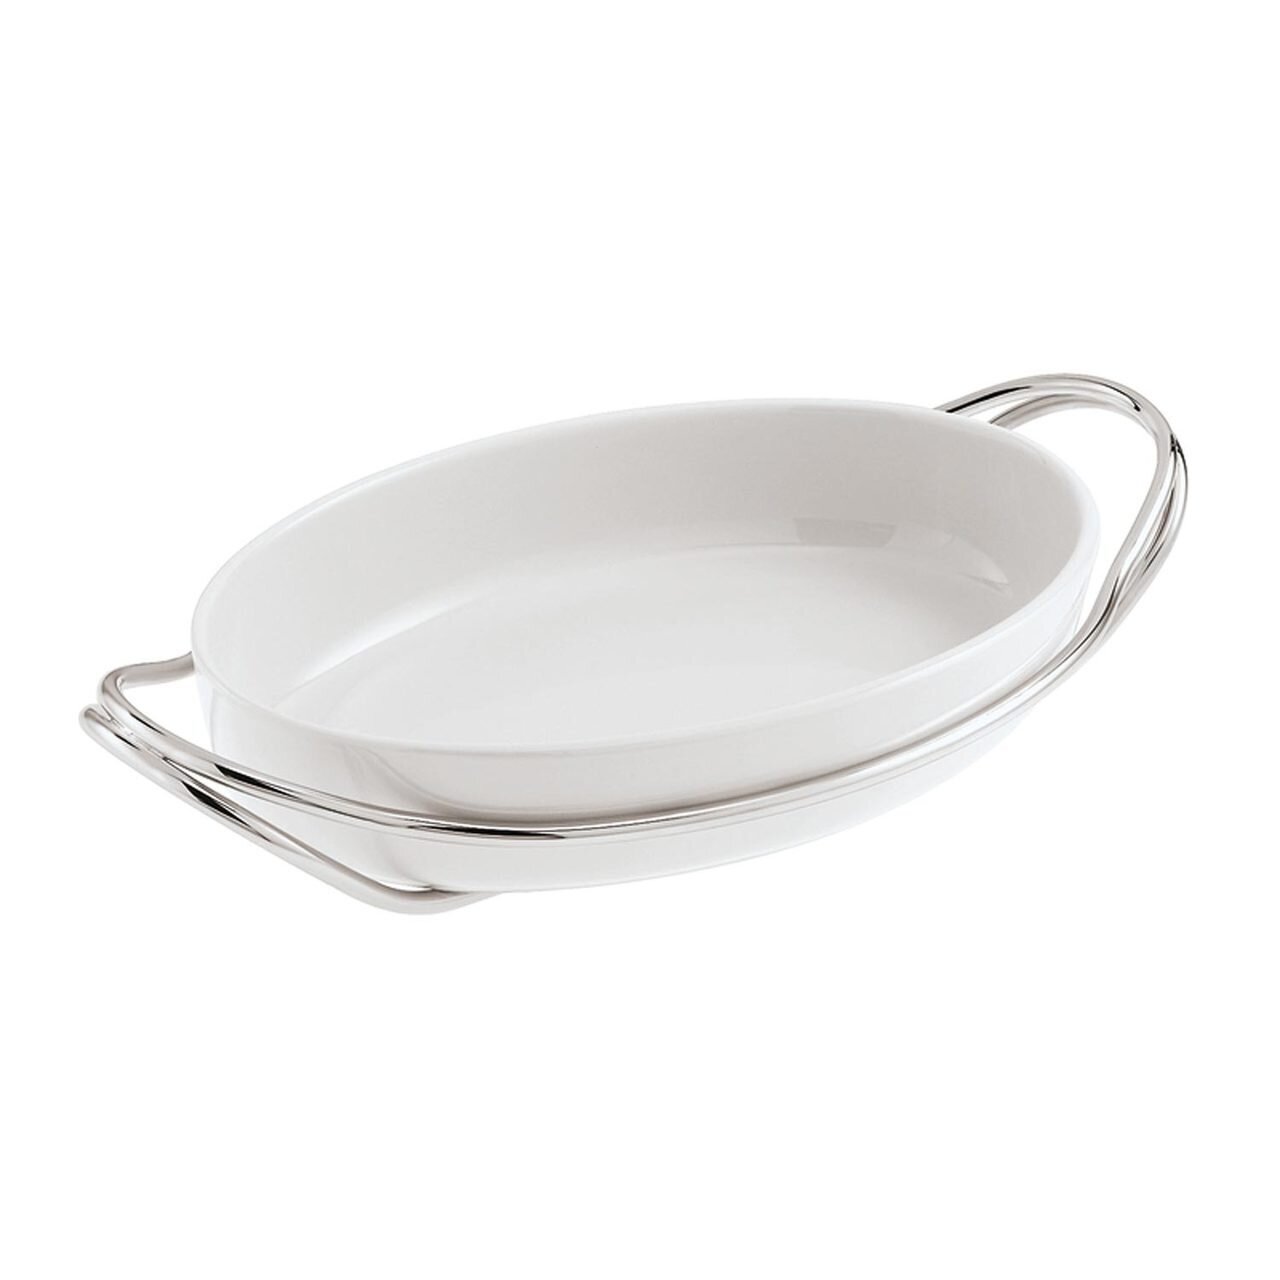 Sambonet New Living Oval Porcelain Dish Set 56401L39